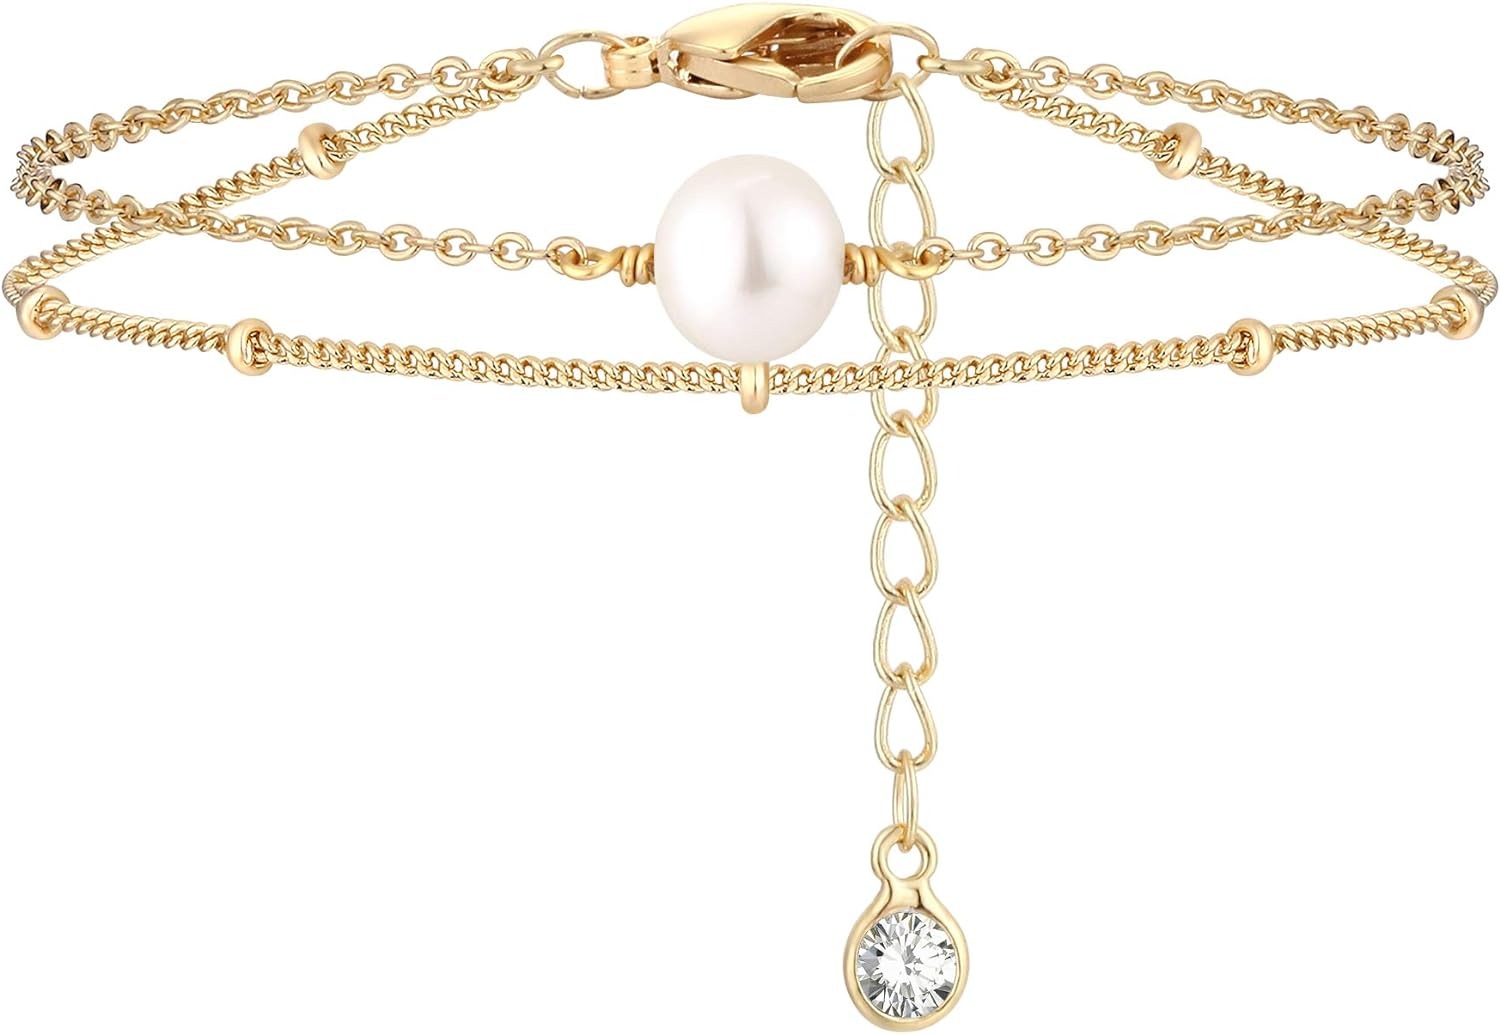 Rantai Gelang Pasangan Cantik Berlapis Emas 14K Perhiasan Sederhana Lucu untuk Anak Perempuan